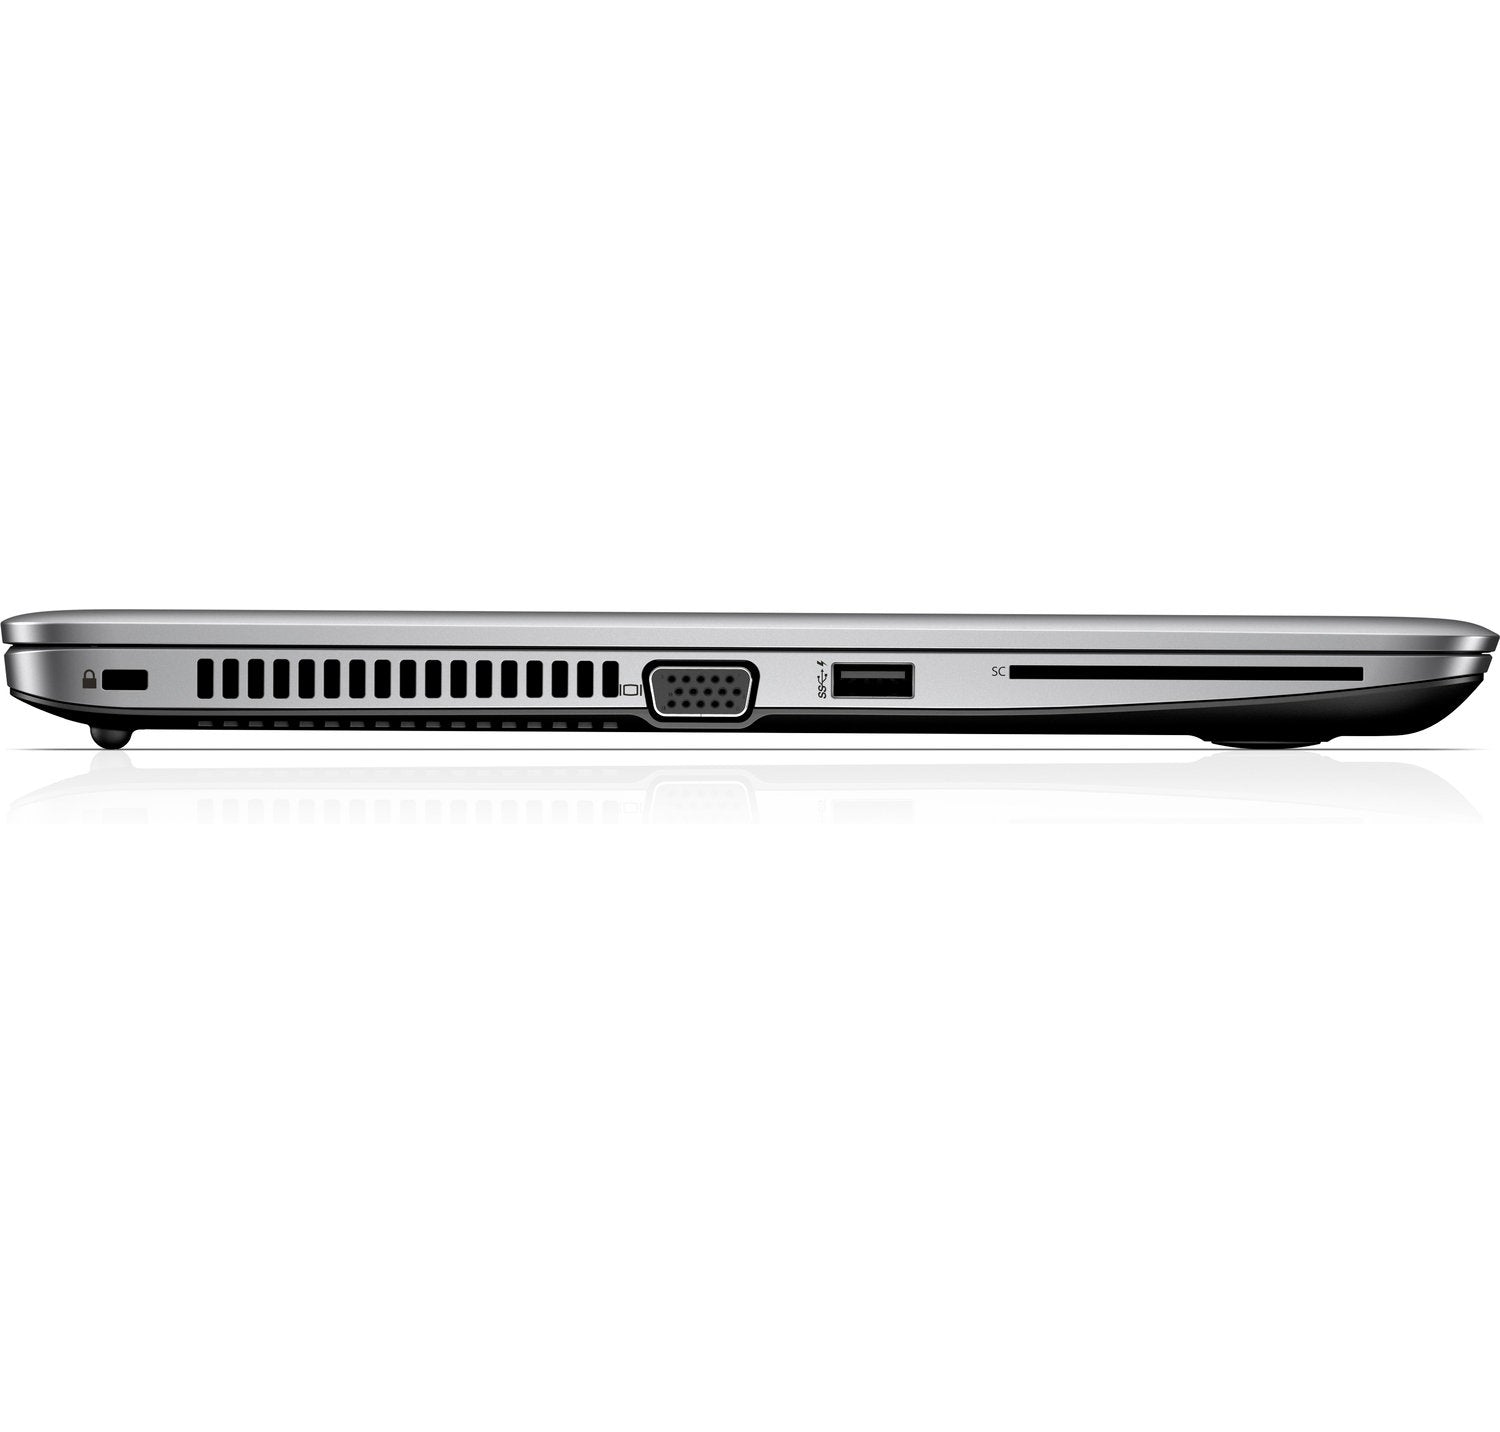 HP EliteBook 745 G4 Notebook side view ports